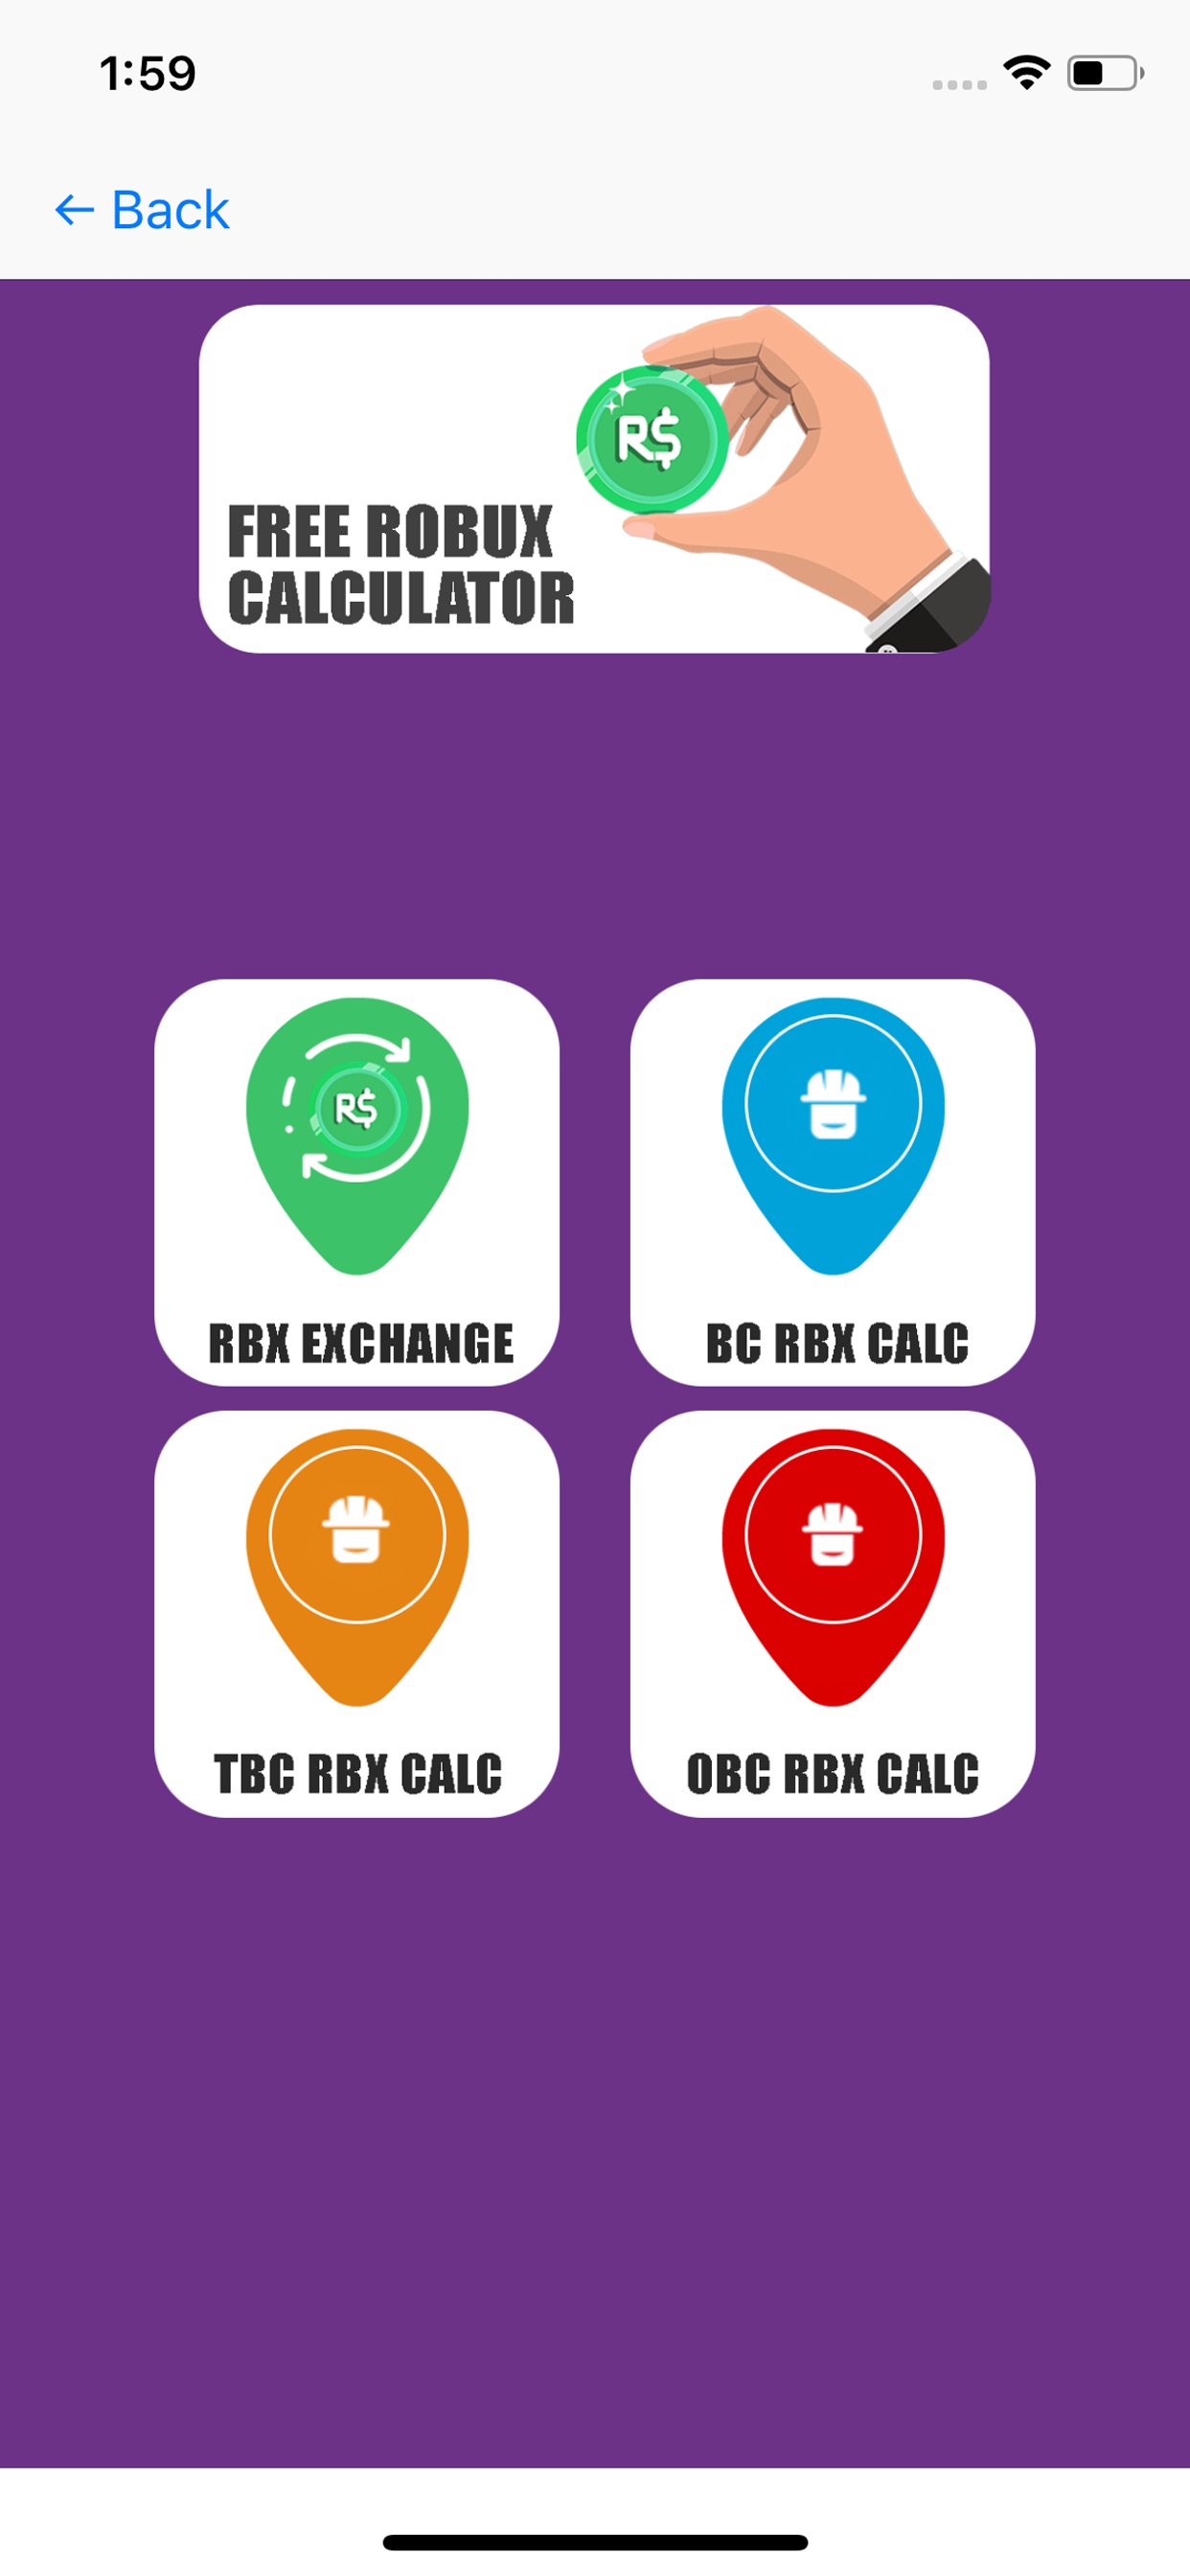 Daily Robux Calculator App Store Review Aso Revenue Downloads Appfollow - free robux calculator aplicaciones en google play